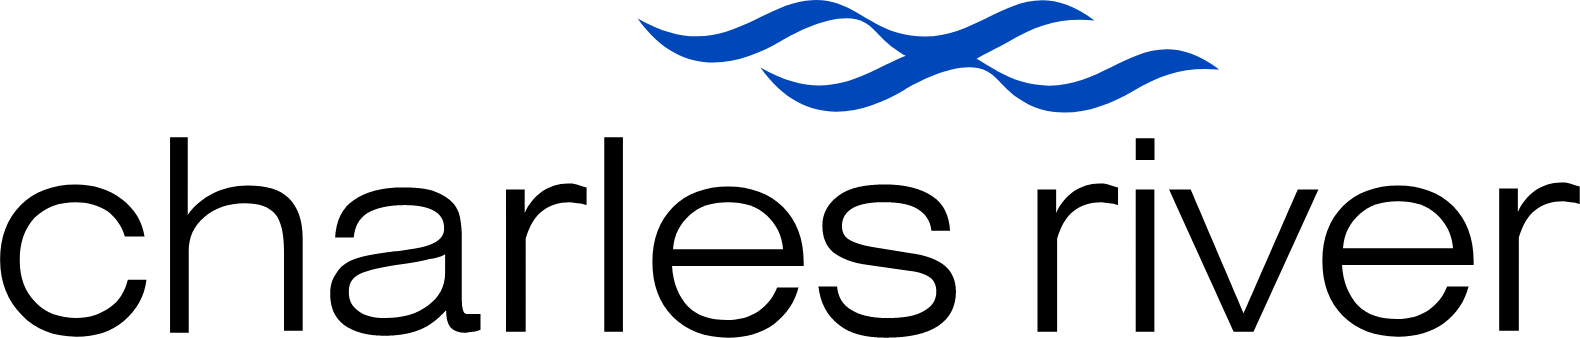 Charles_River_Laboratories_logo